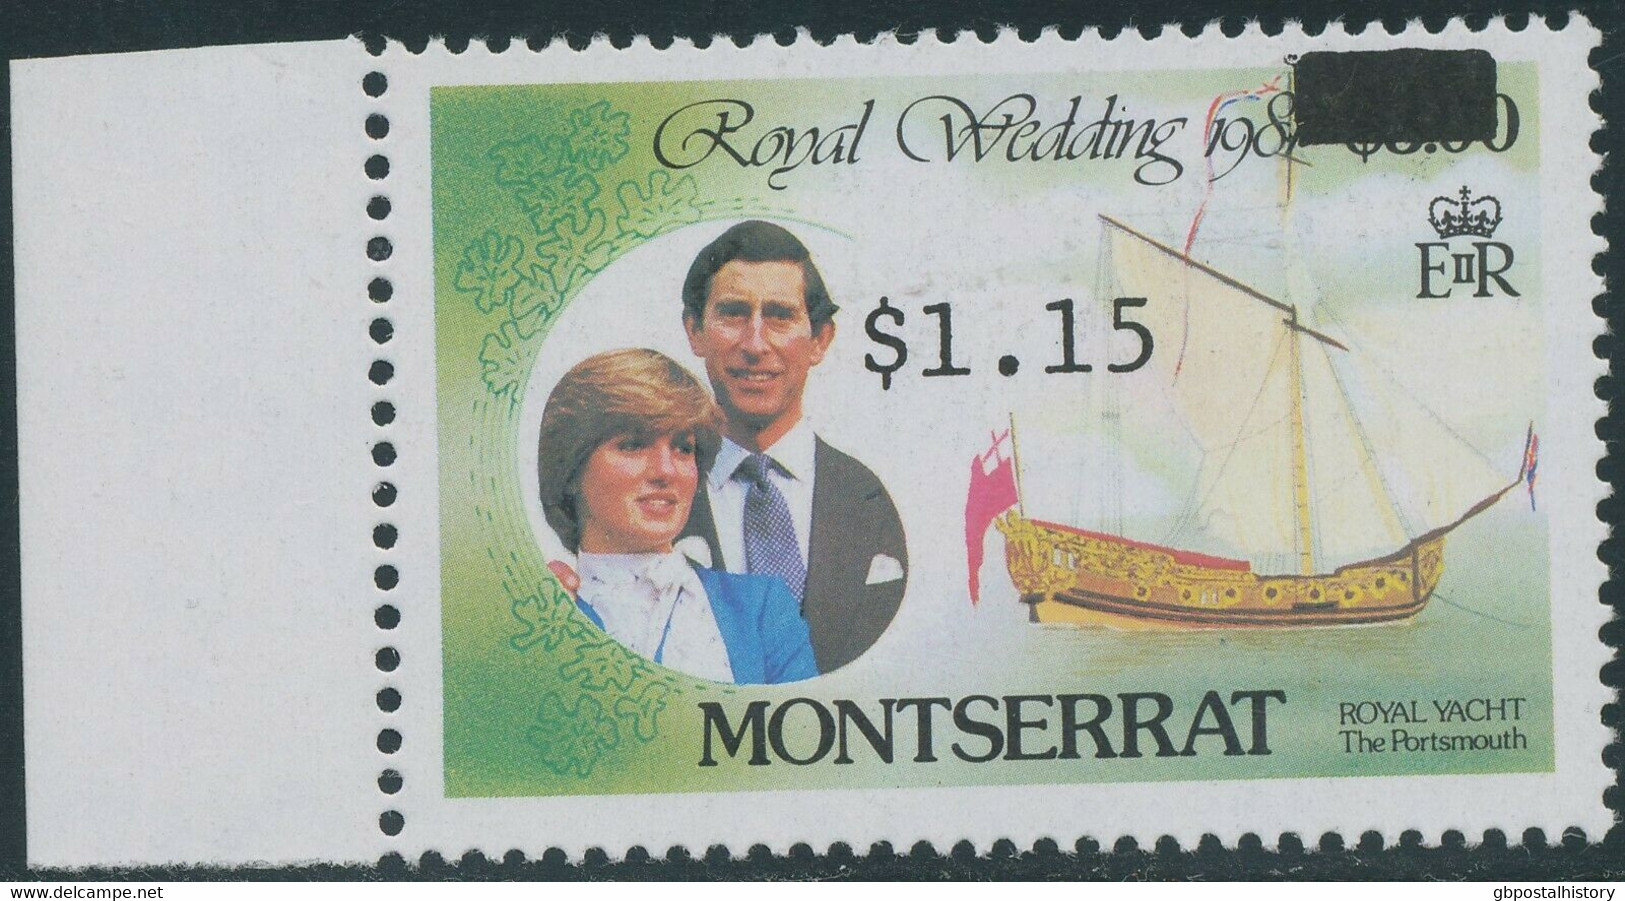 MONTSERRAT 1983 1.15 $ On 3 $ On Charles & Diana U/M MAJOR VARIETY: MISPRINT - Montserrat